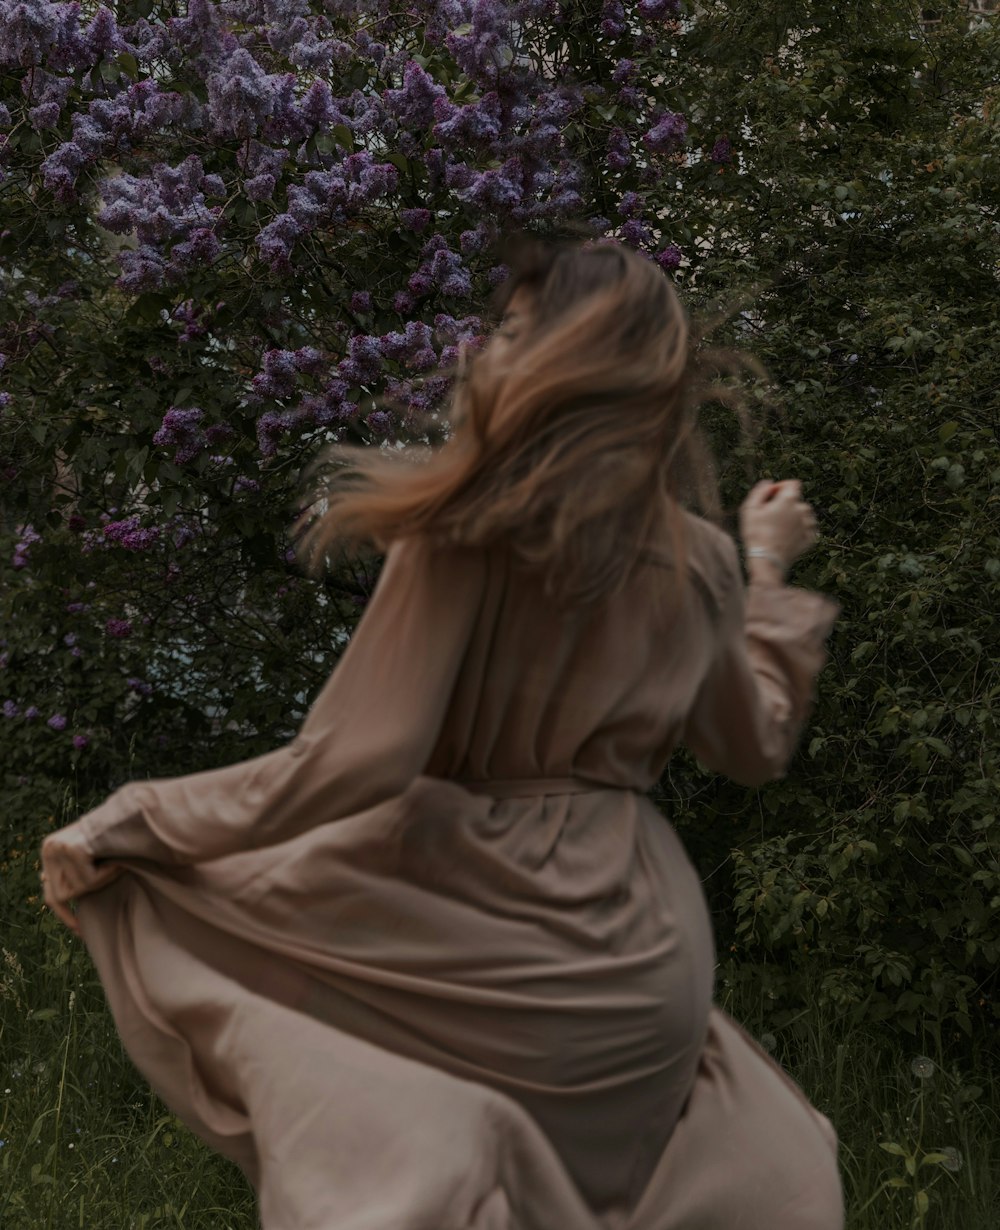 a woman in a long dress walking through a field